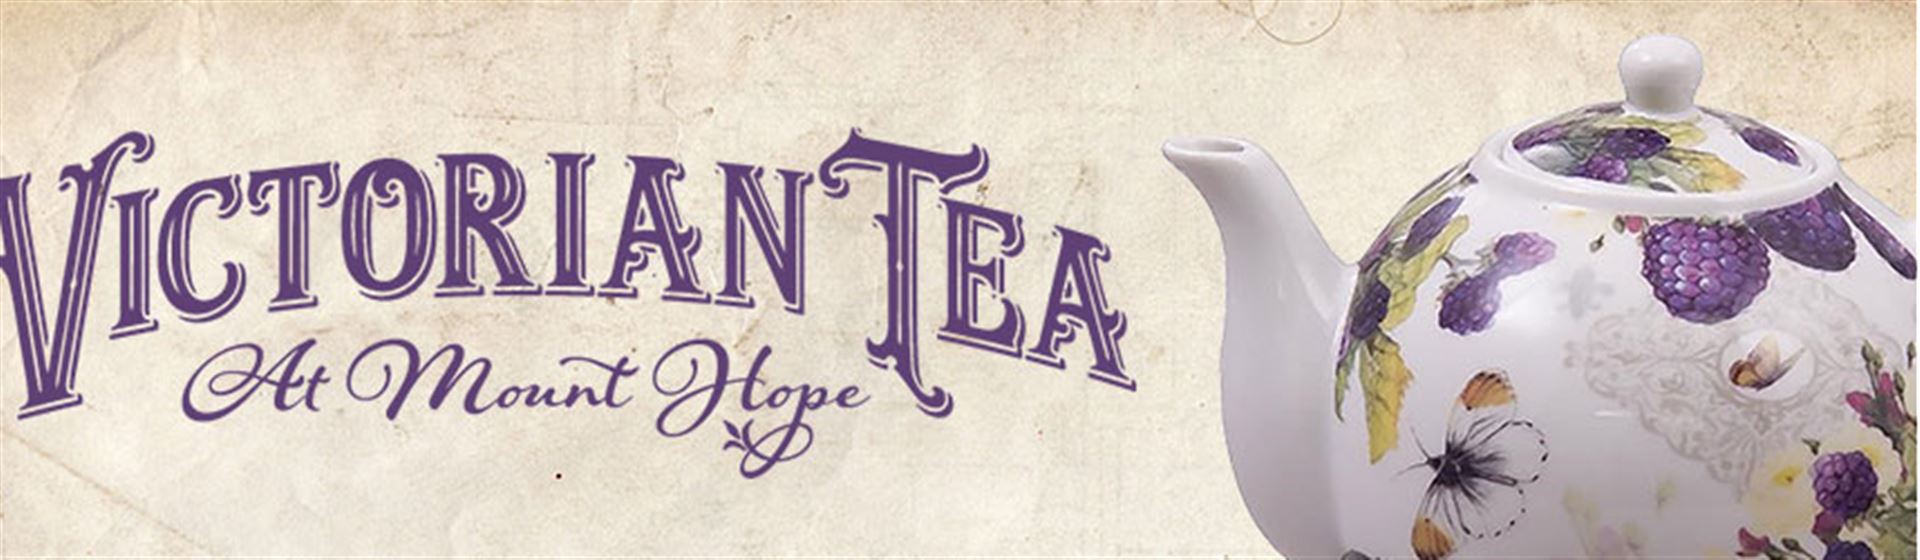 Victorian Tea at Mount Hope